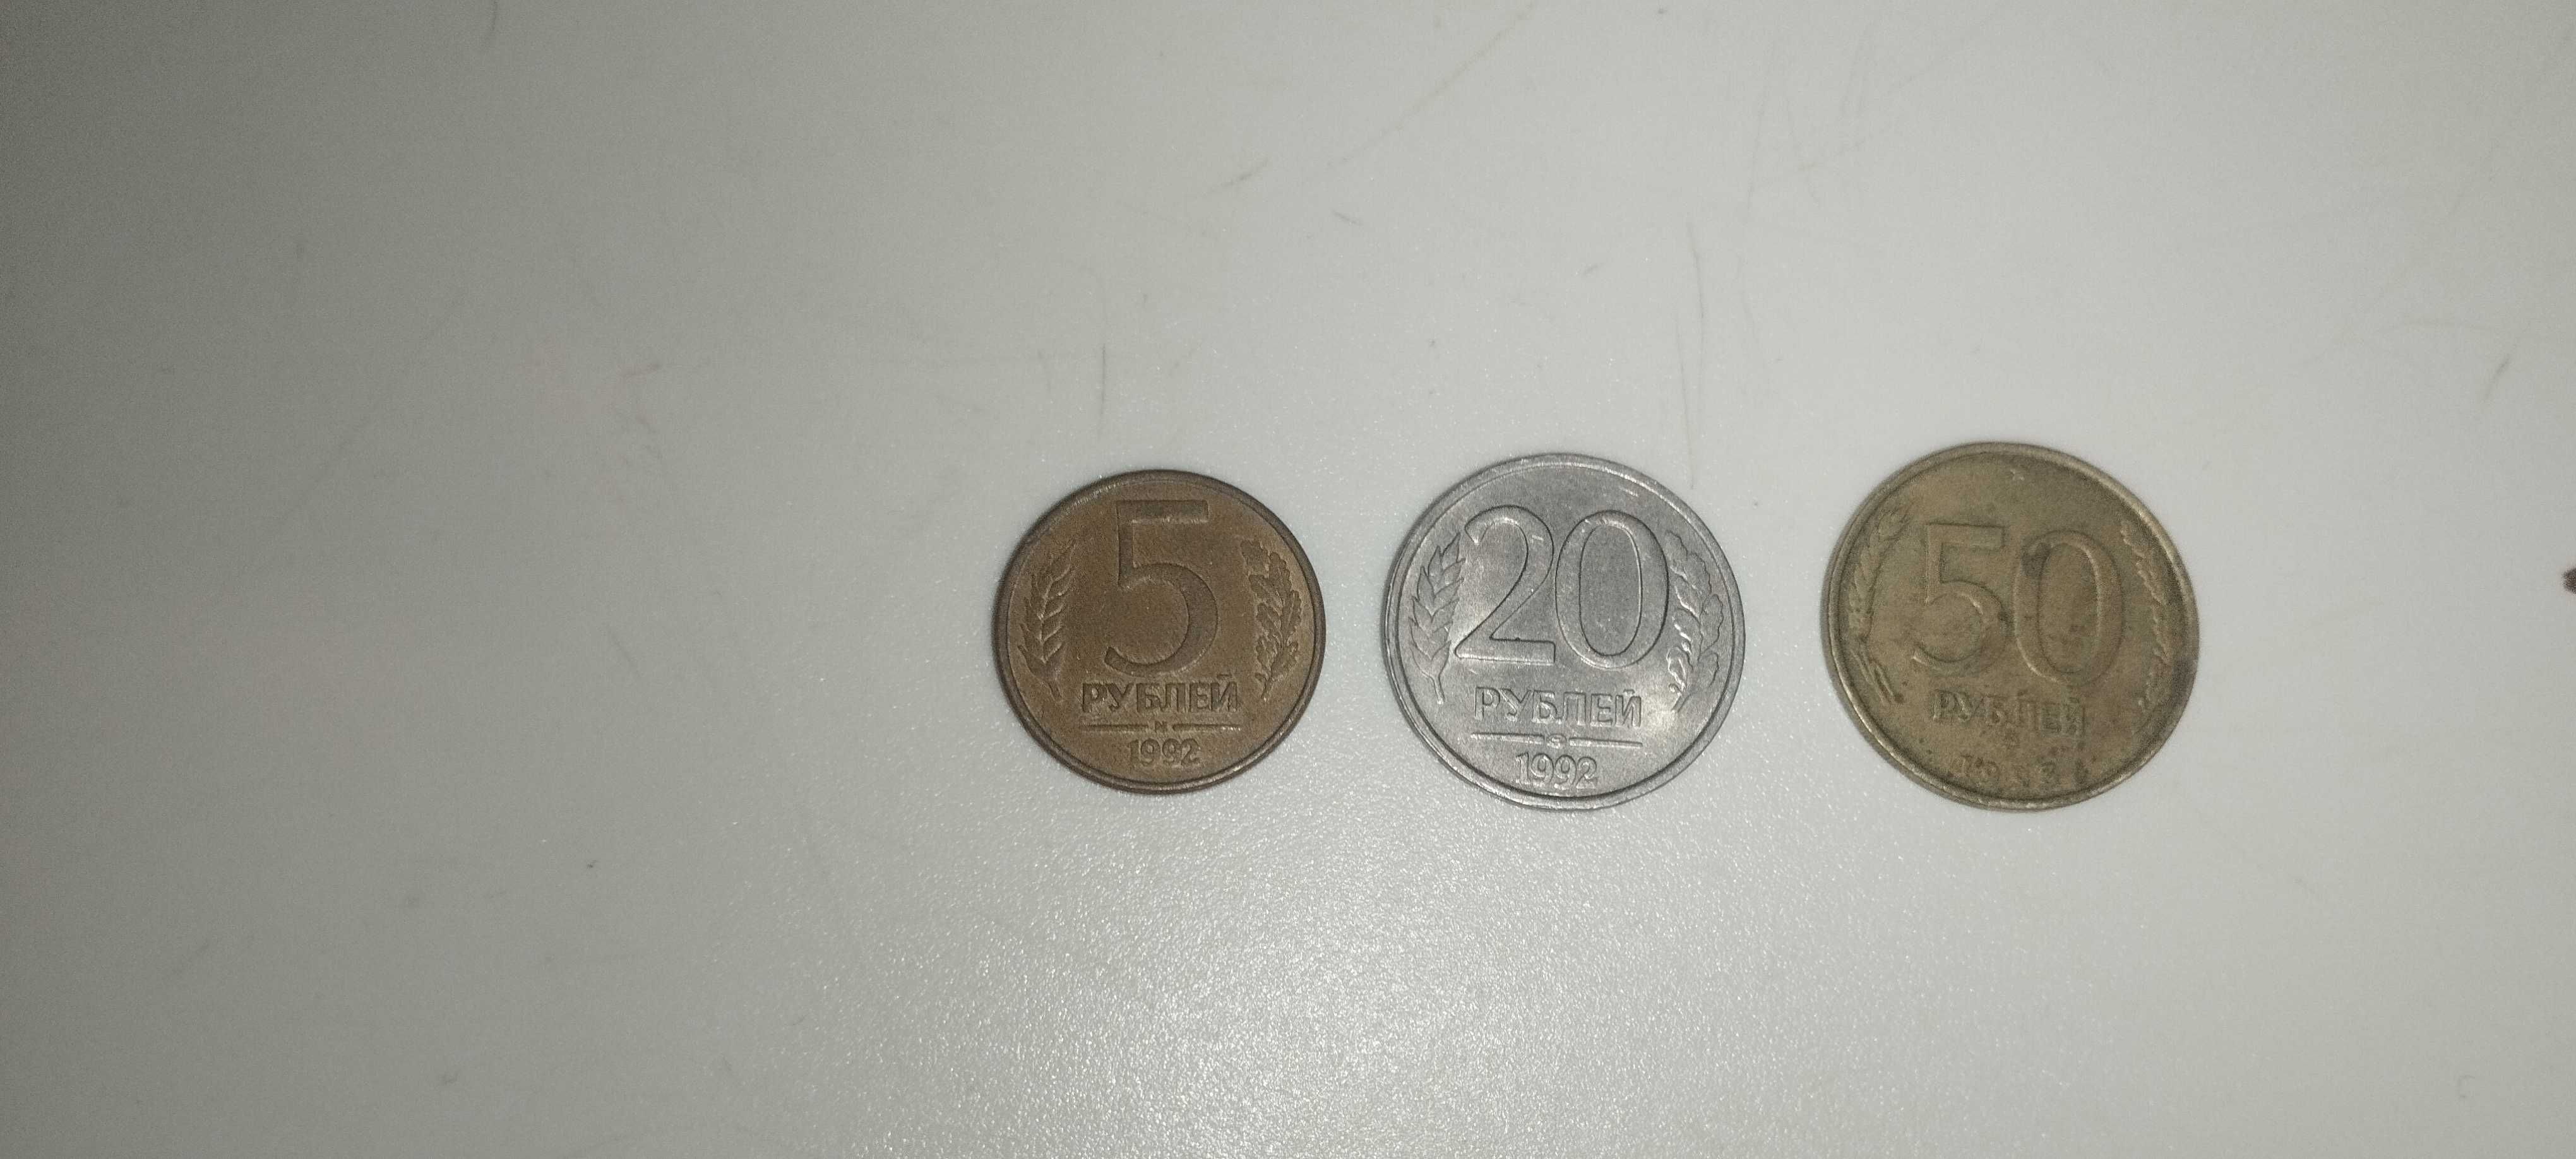 6 monet z lat 90.: 3 rosyjskie, 2 litewskie i 1 ukraińska